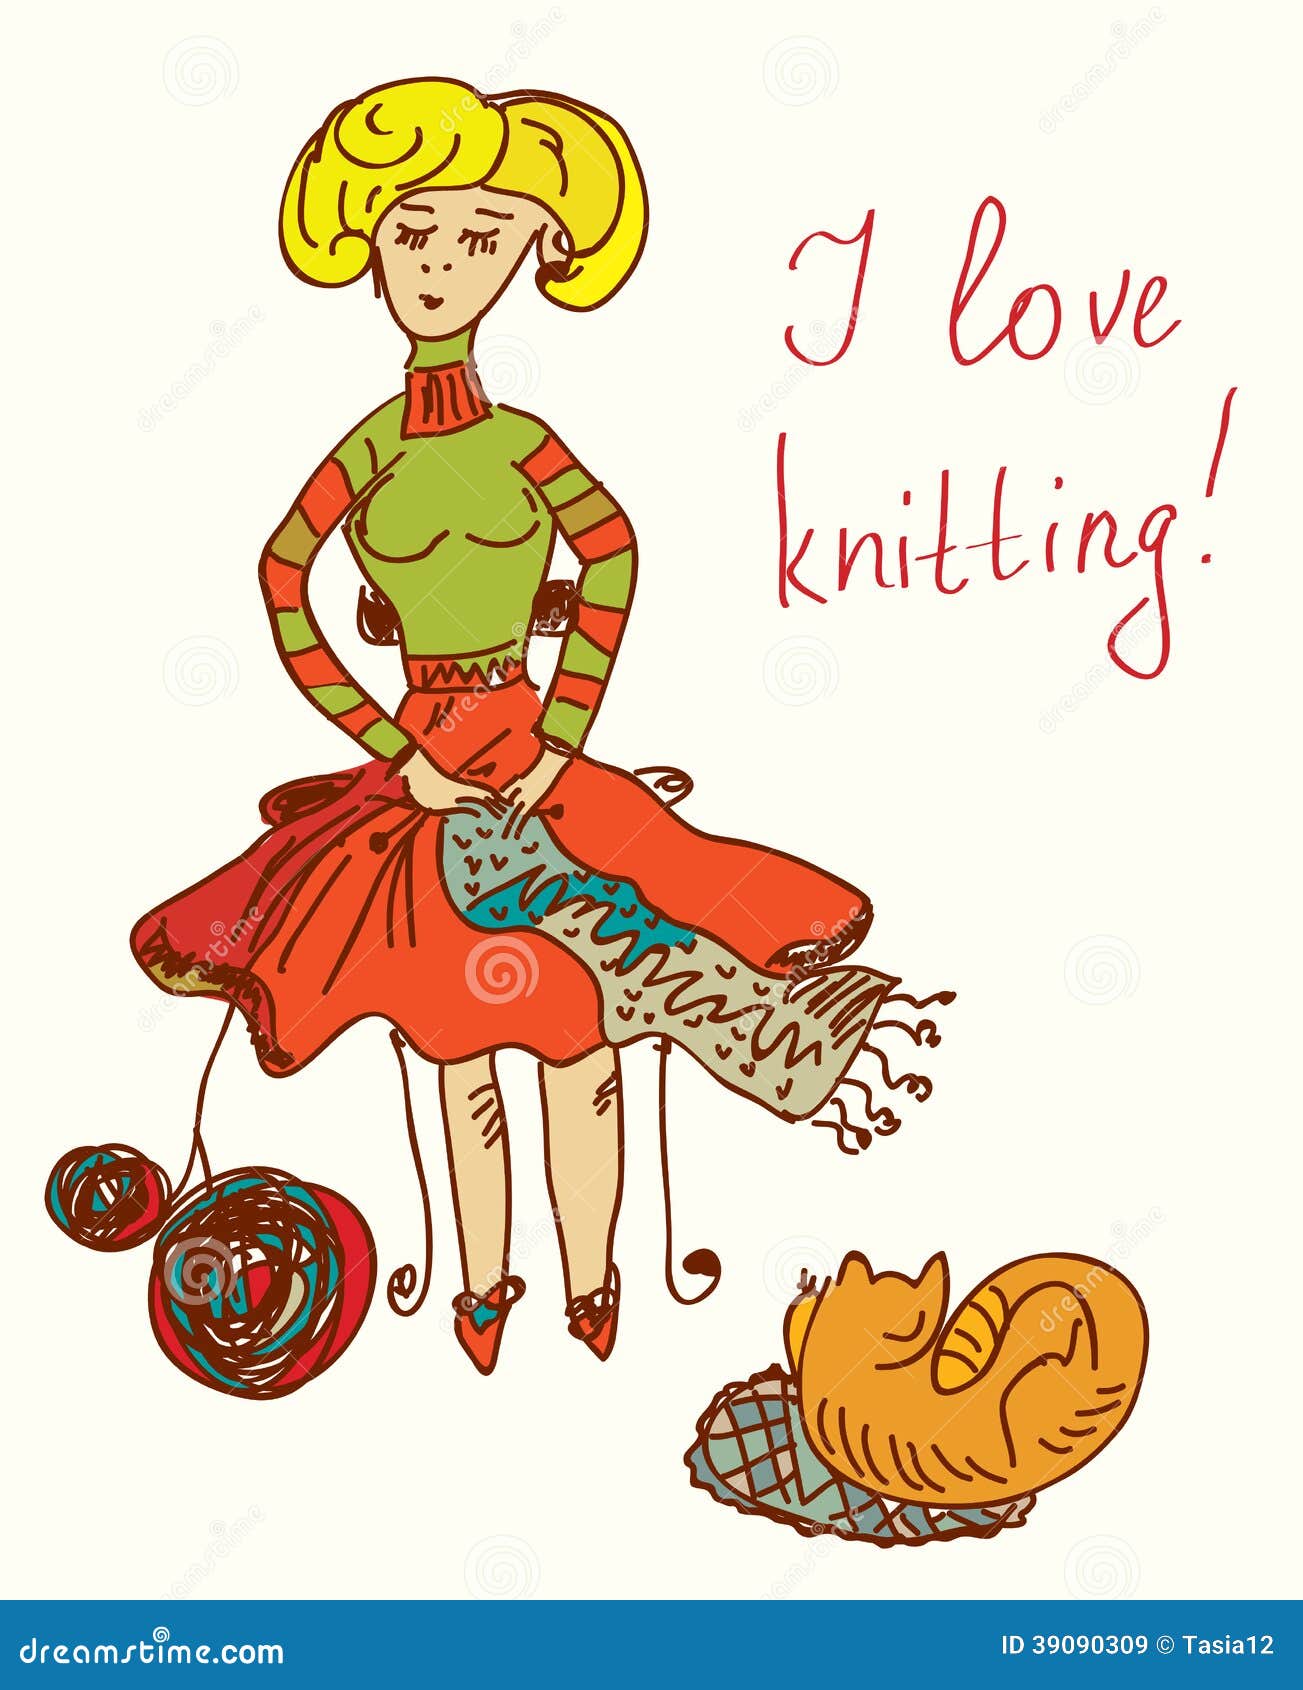 funny knitting clipart - photo #38